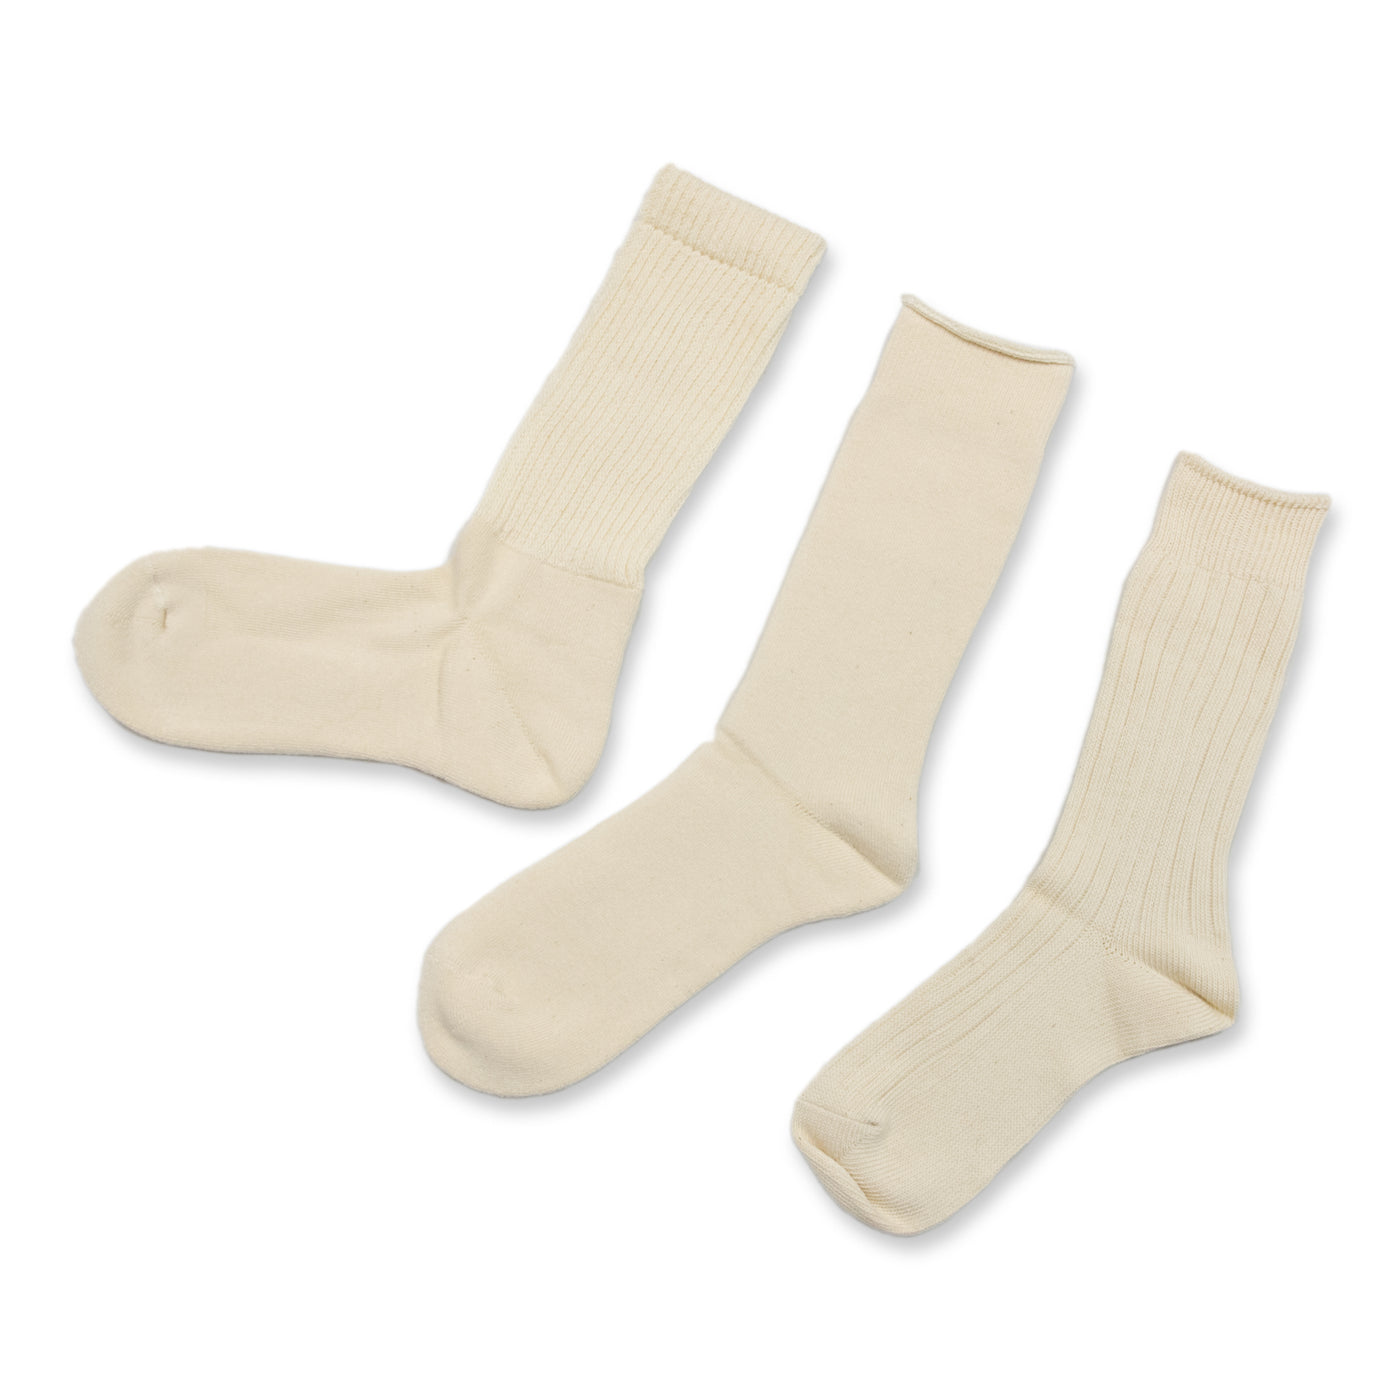  Rototo Organic Cotton Daily Three Pack Socks Ecru Made In Japan FULL VIEW